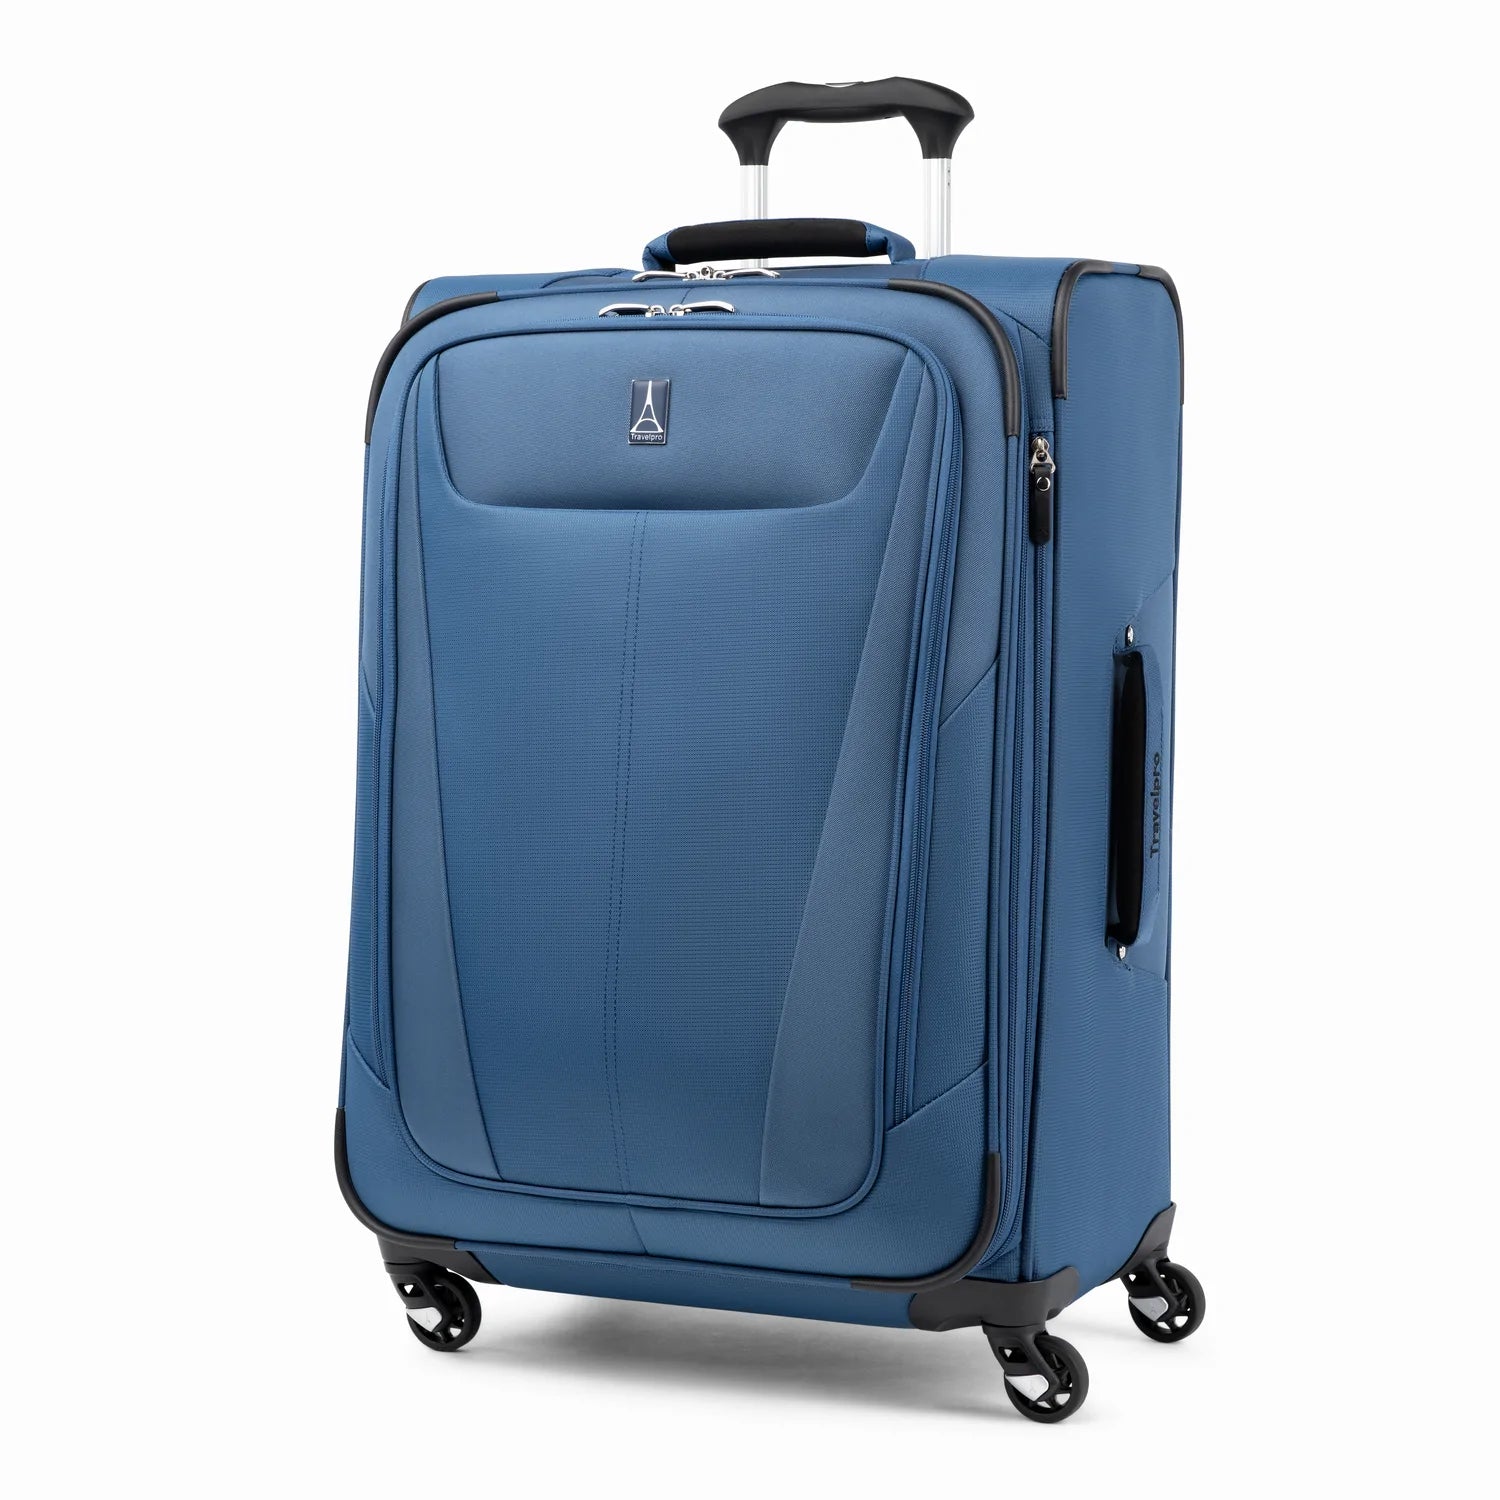 Travelpro Maxlite 5 25" Spinner Luggage